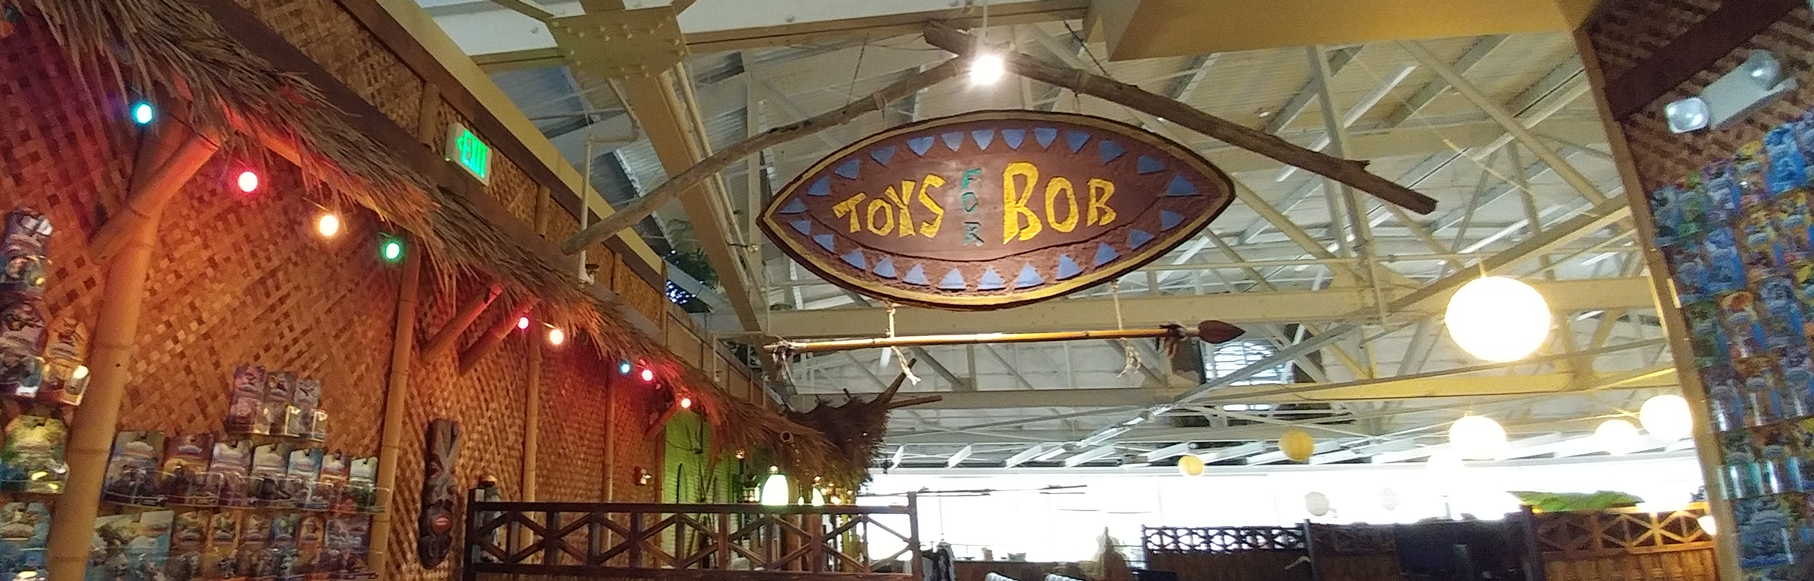 Toys for Bob entry